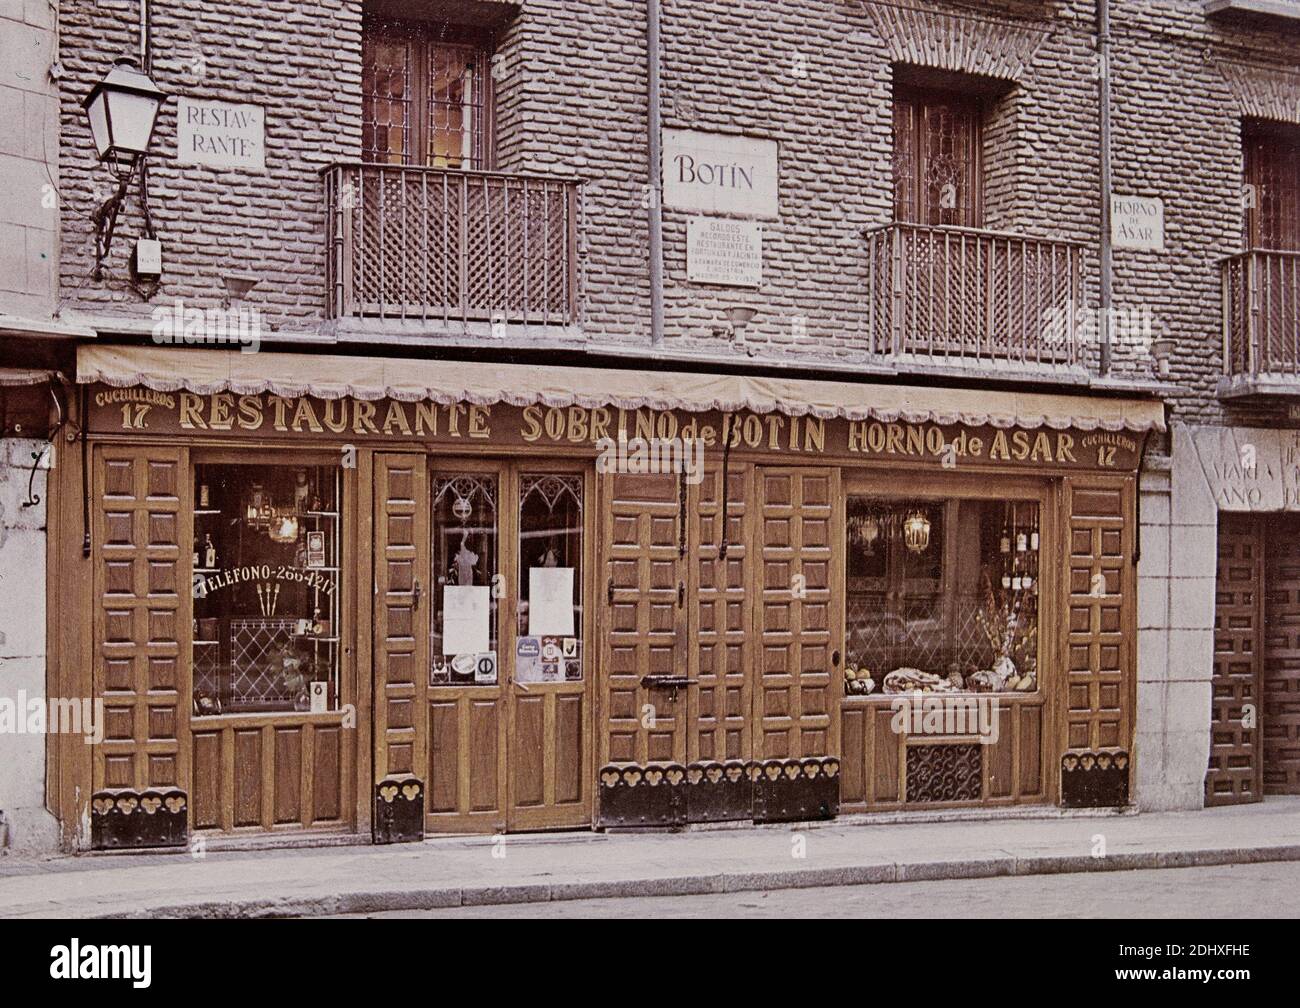 RESTAURANTE CASA BOTIN - FOTO AÑOS 70. Location: RESTAURANTE BOTIN. MADRID.  SPAIN Stock Photo - Alamy